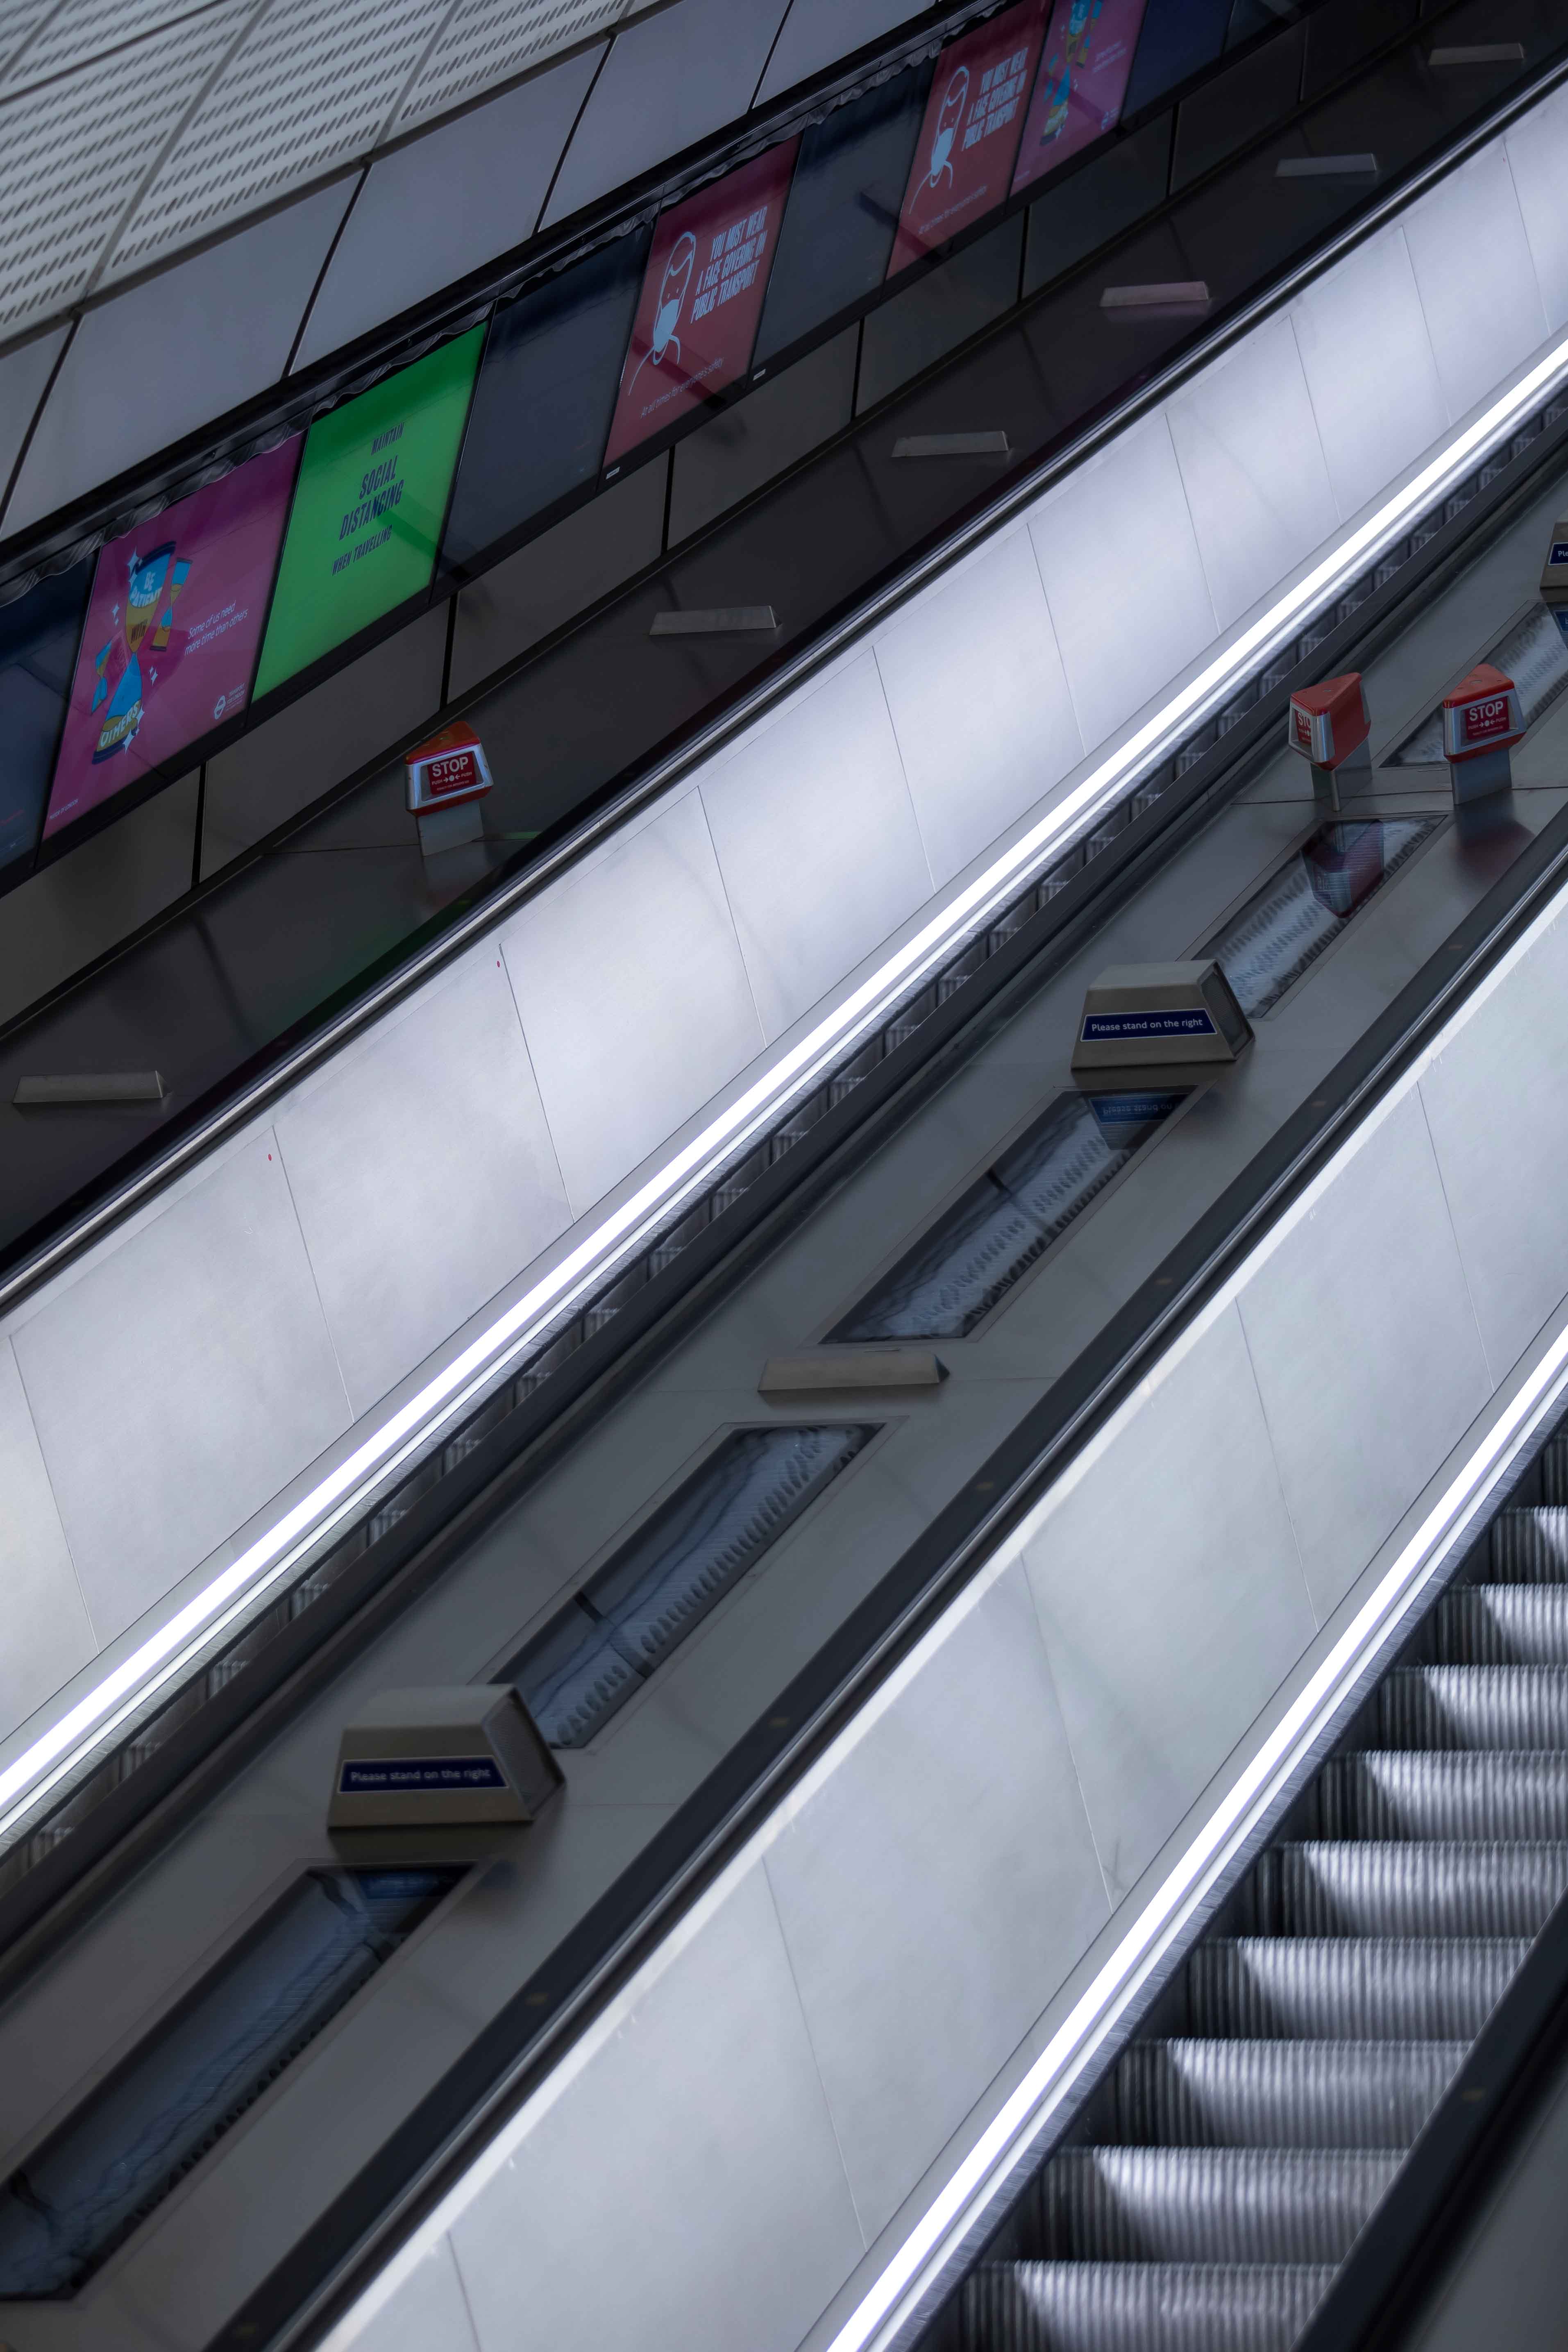 The new escalators at Whitechapel station